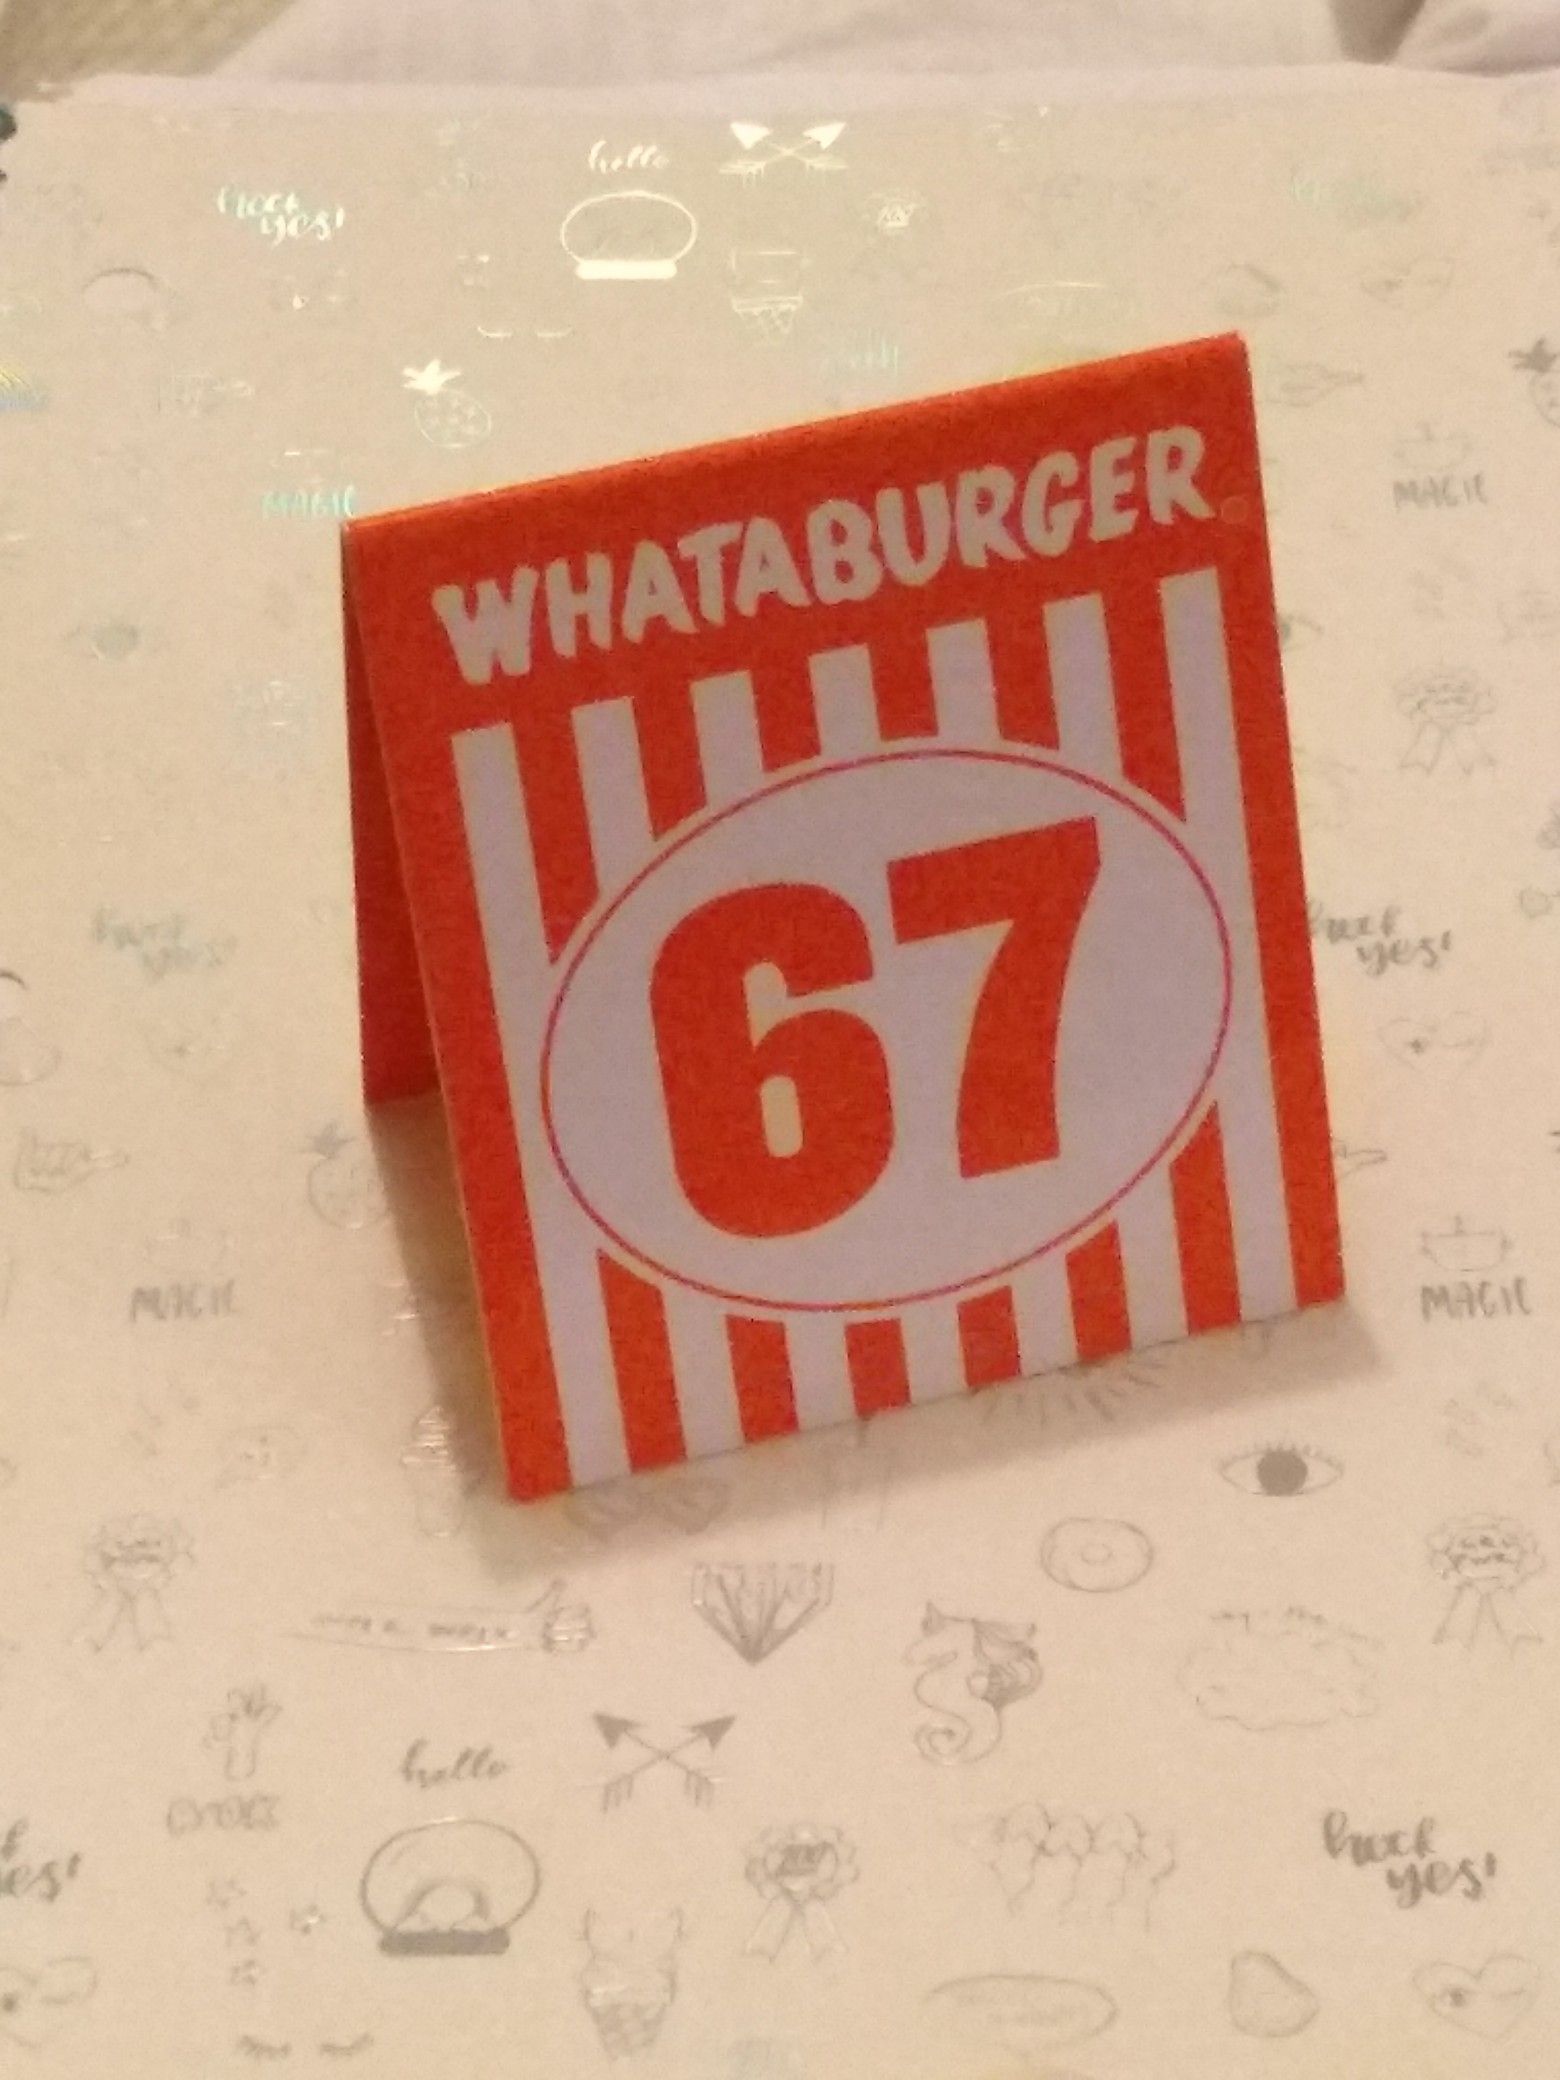 Whataburger #67 sign!!